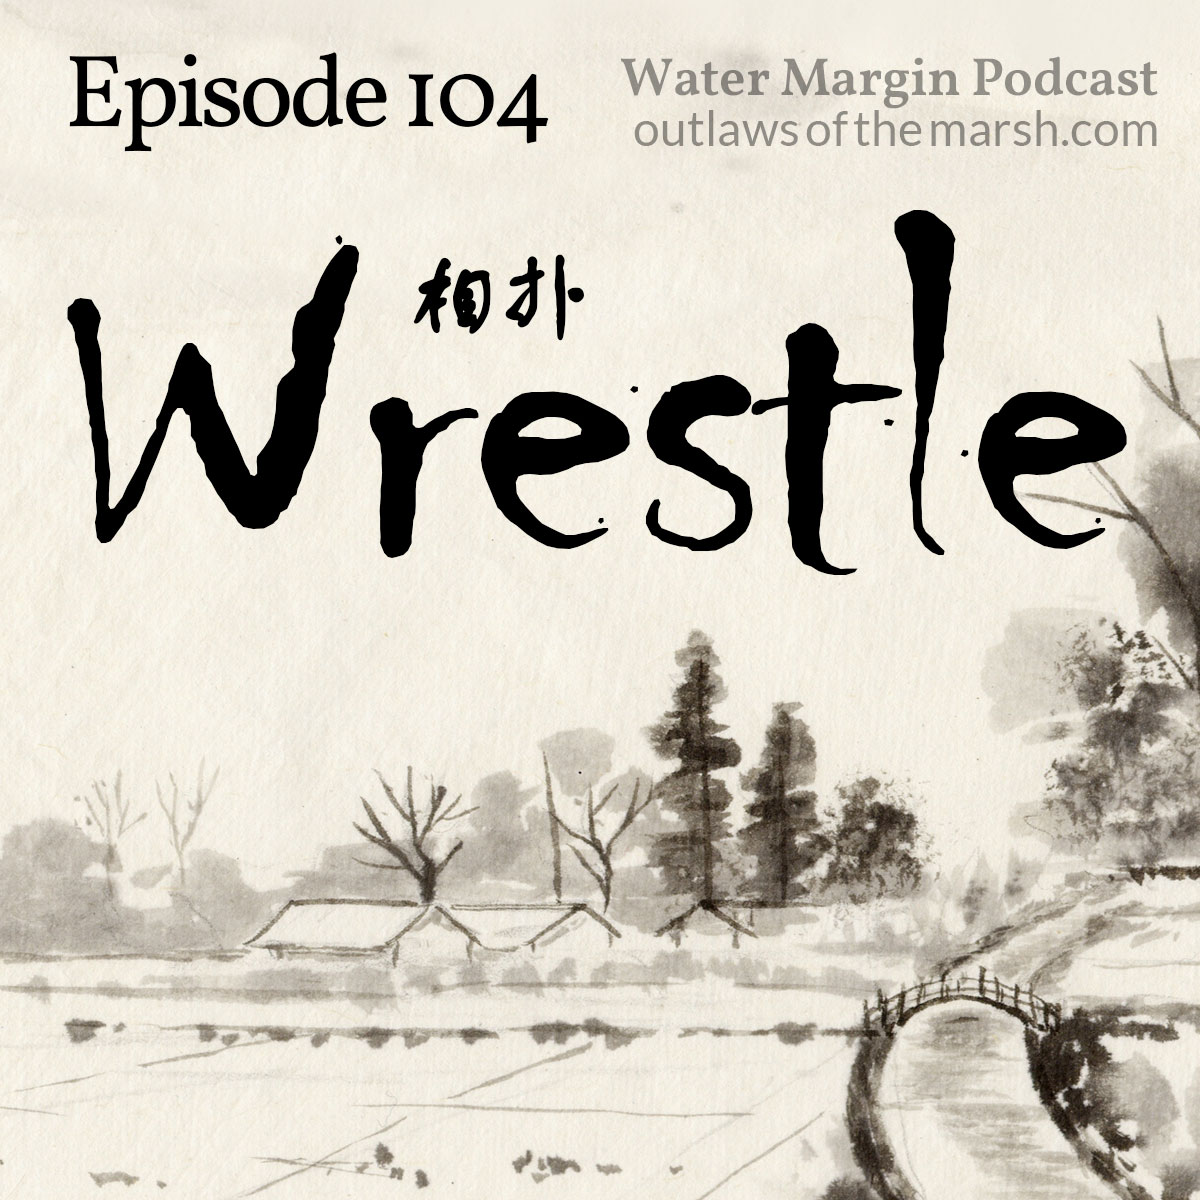 Water Margin Podcast: Episode 104